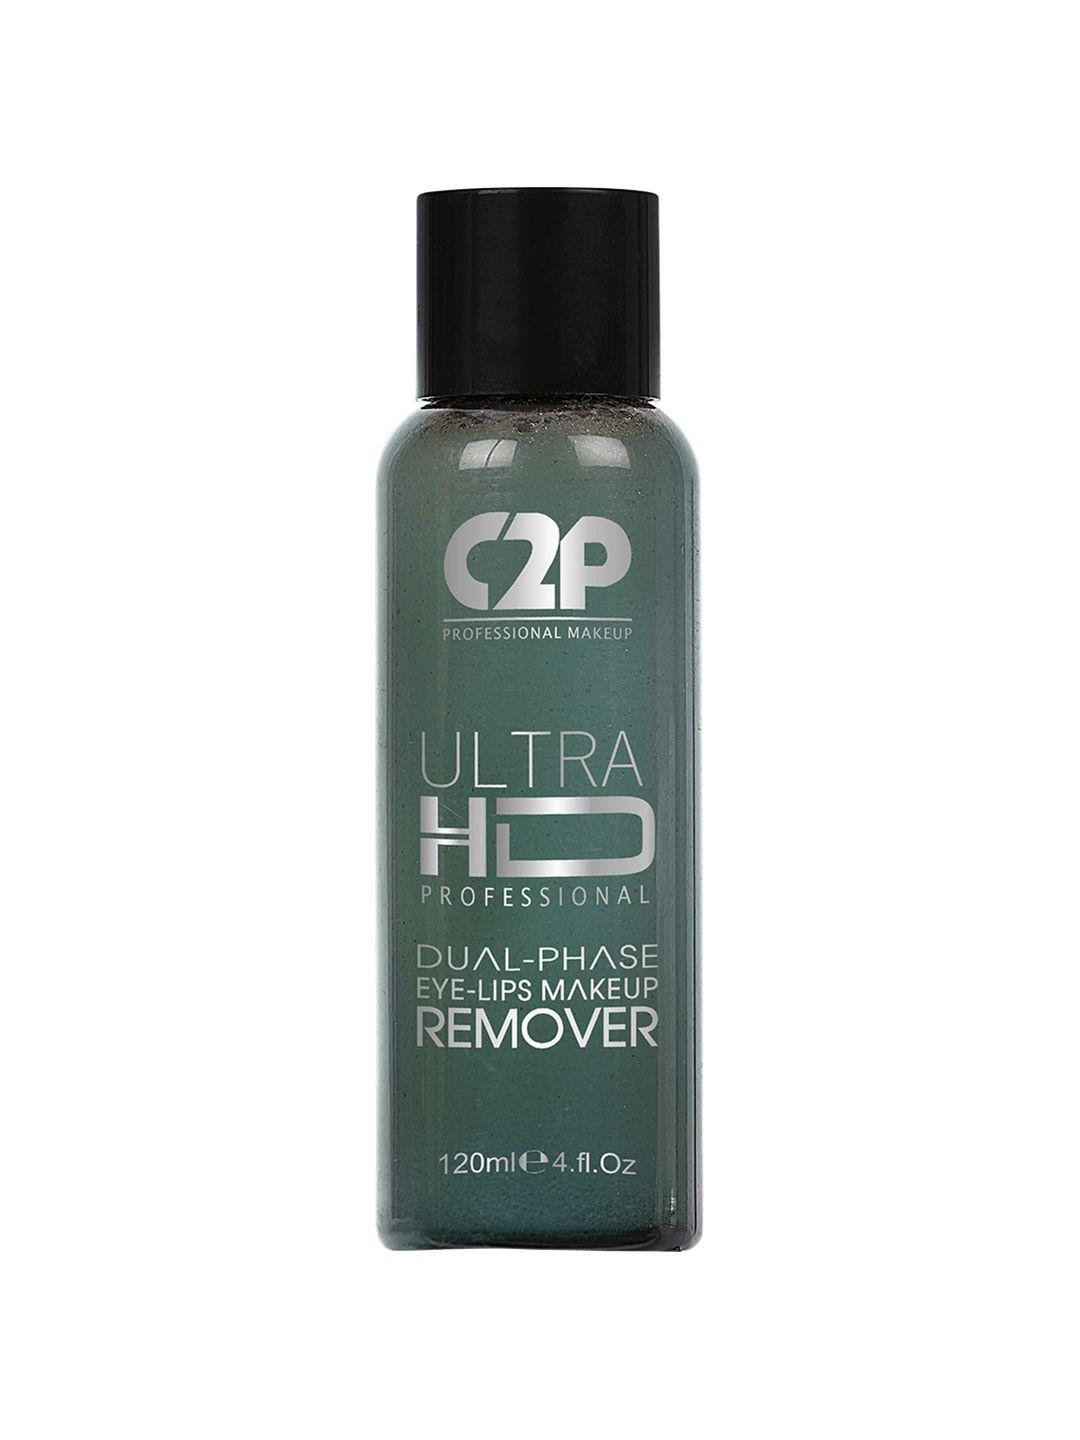 c2p-professional-makeup-ultra-hd-dual-phase-eye-&-lip-makeup-remover-120ml